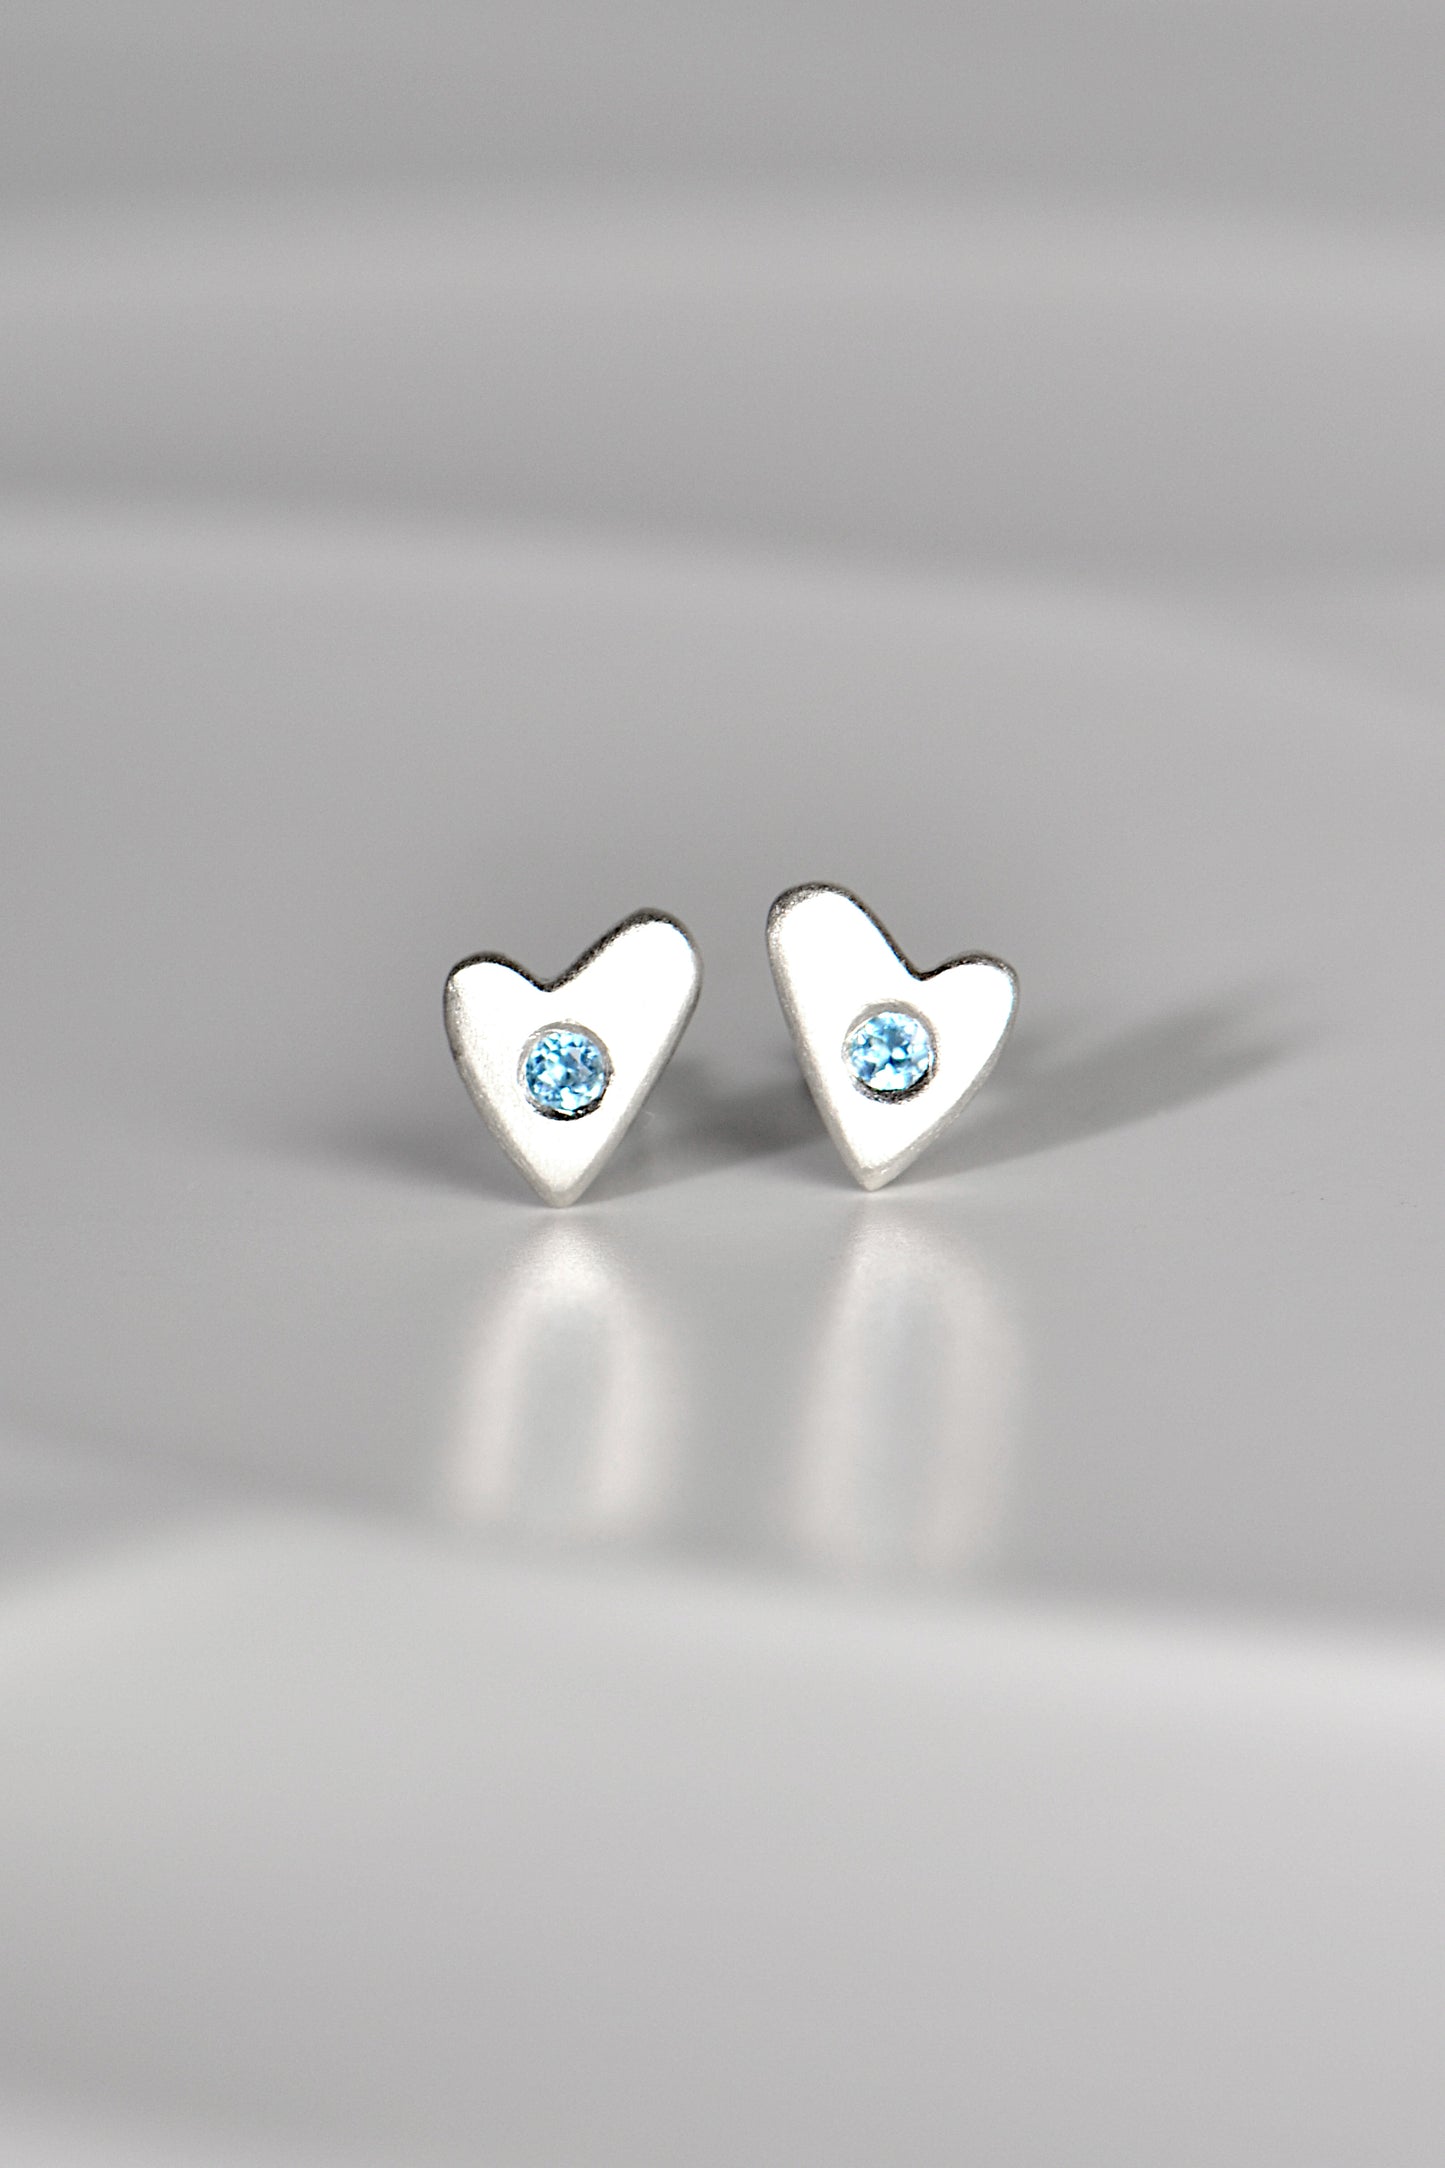 From the Heart aquamarine earrings